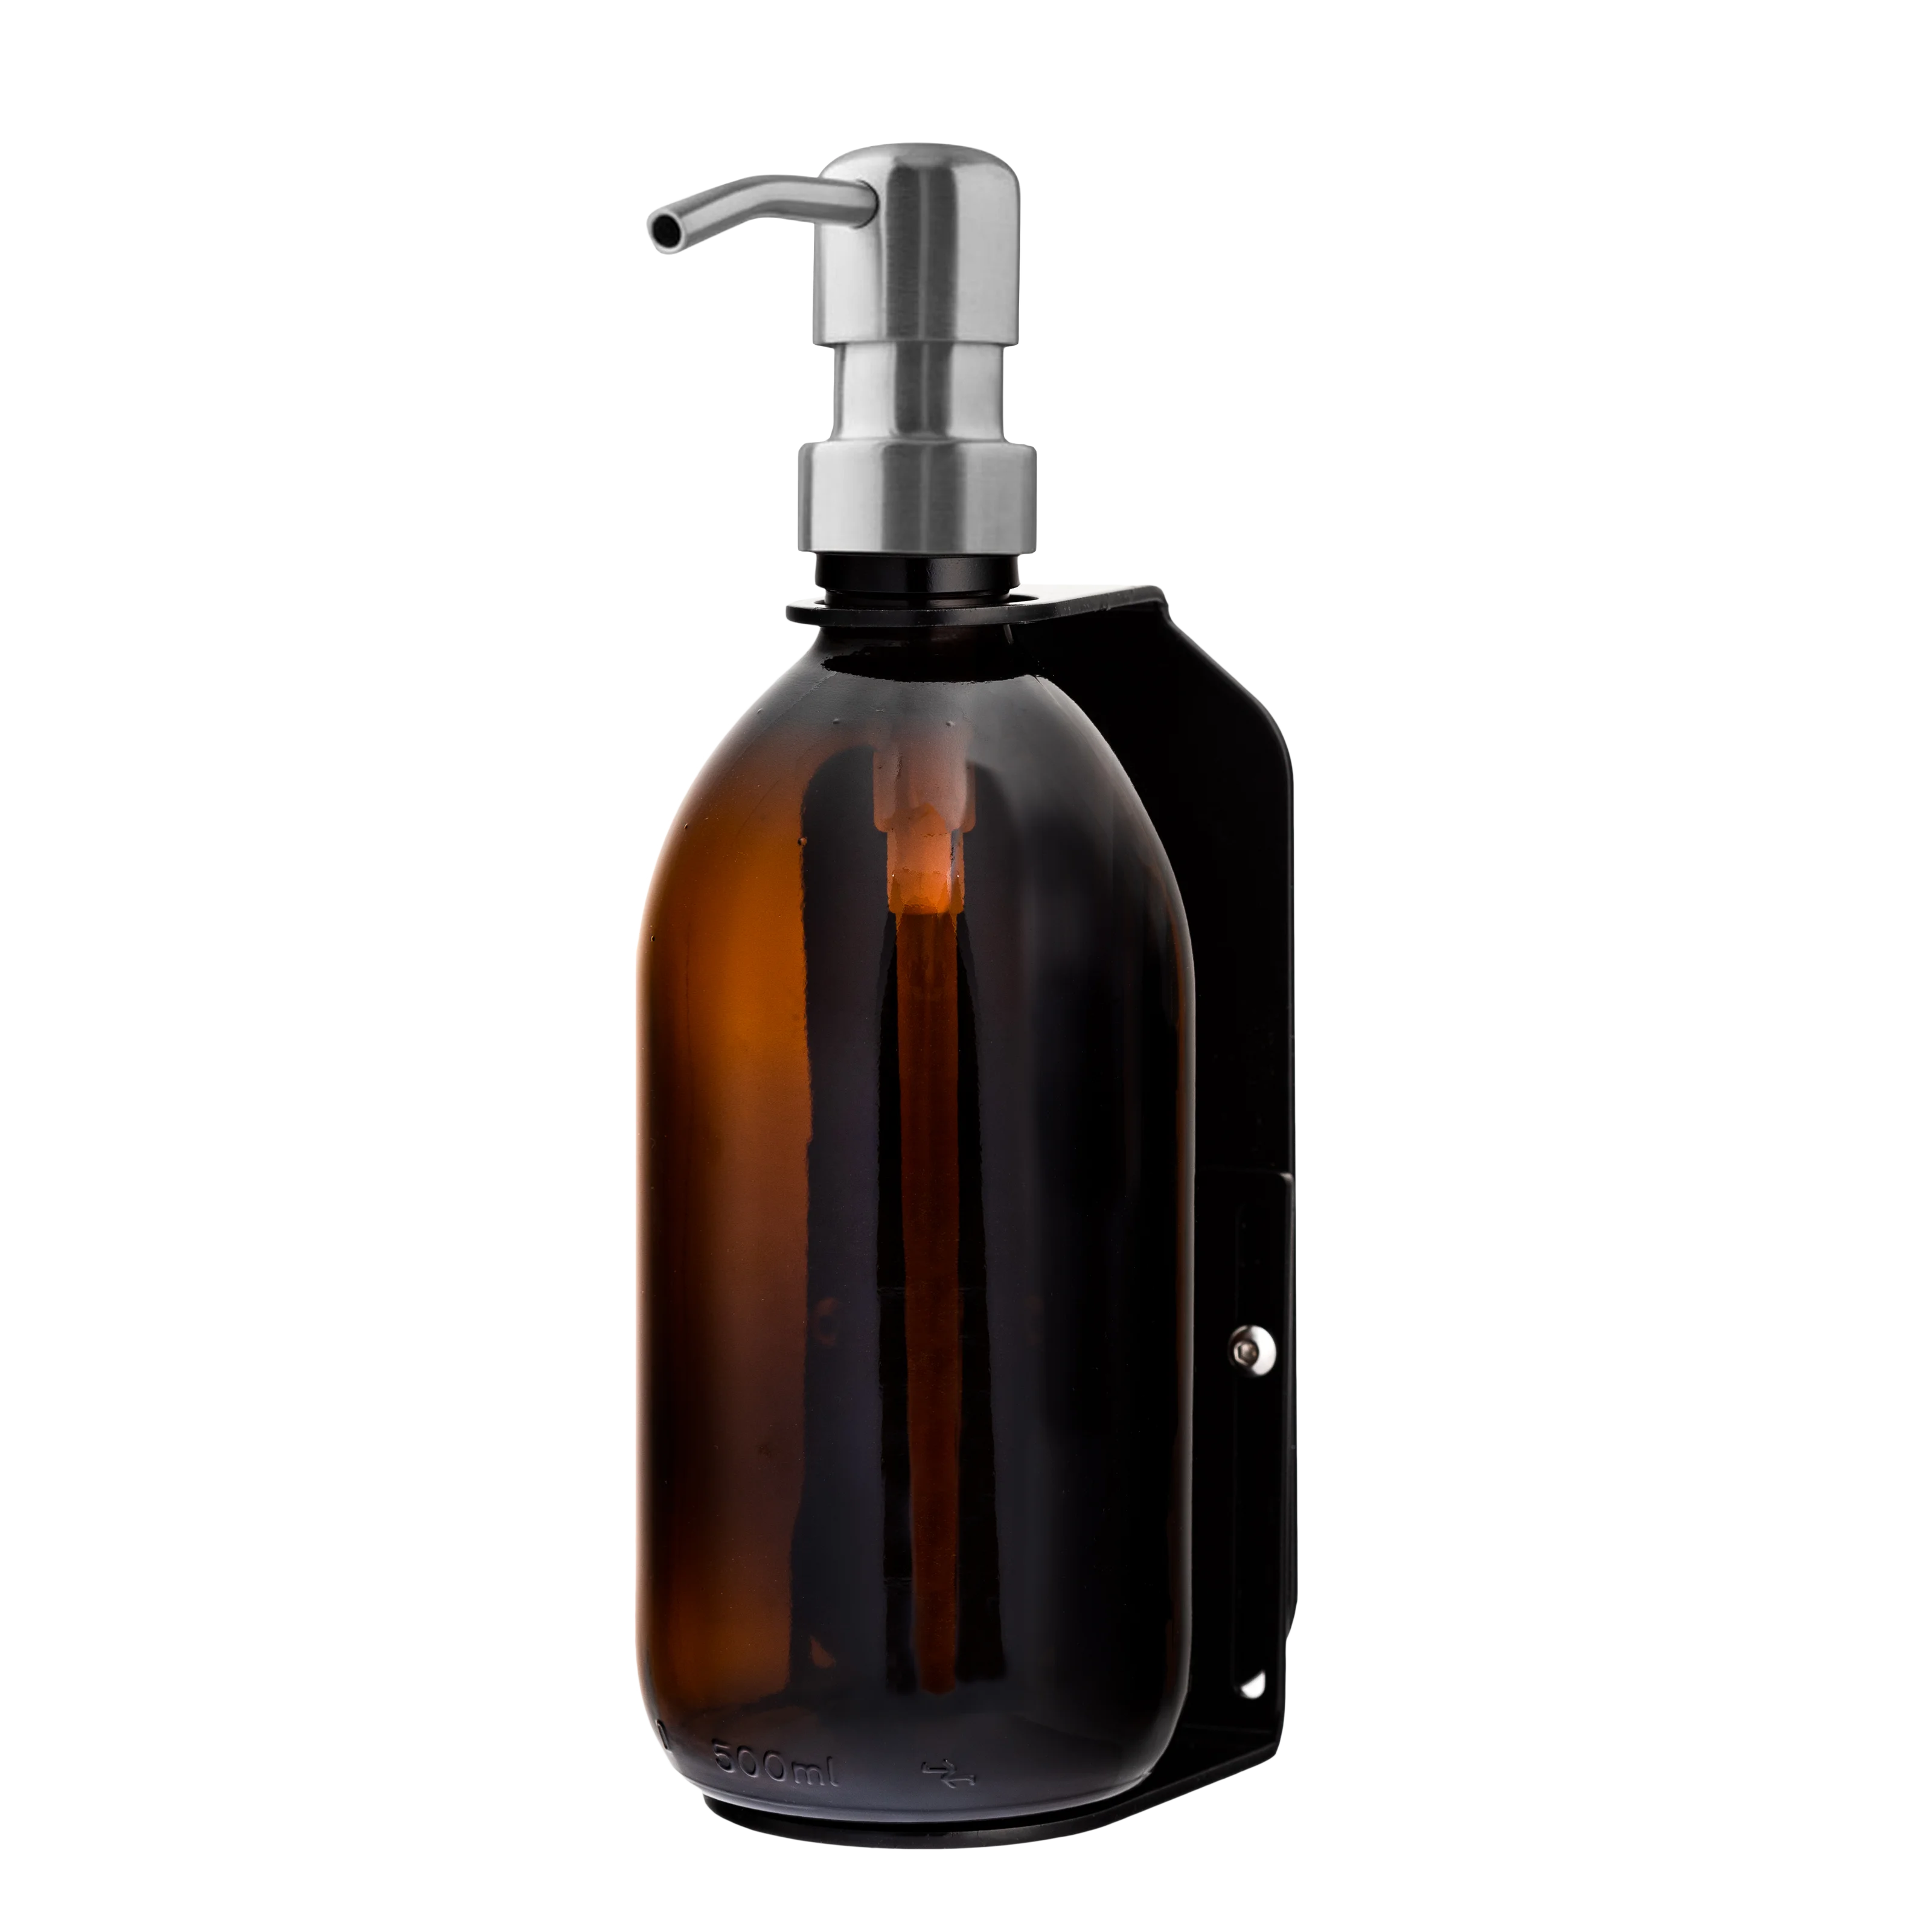 Black Single Wall Mounted Soap Dispenser 300ml amber dispenser bottle with silver metal pump